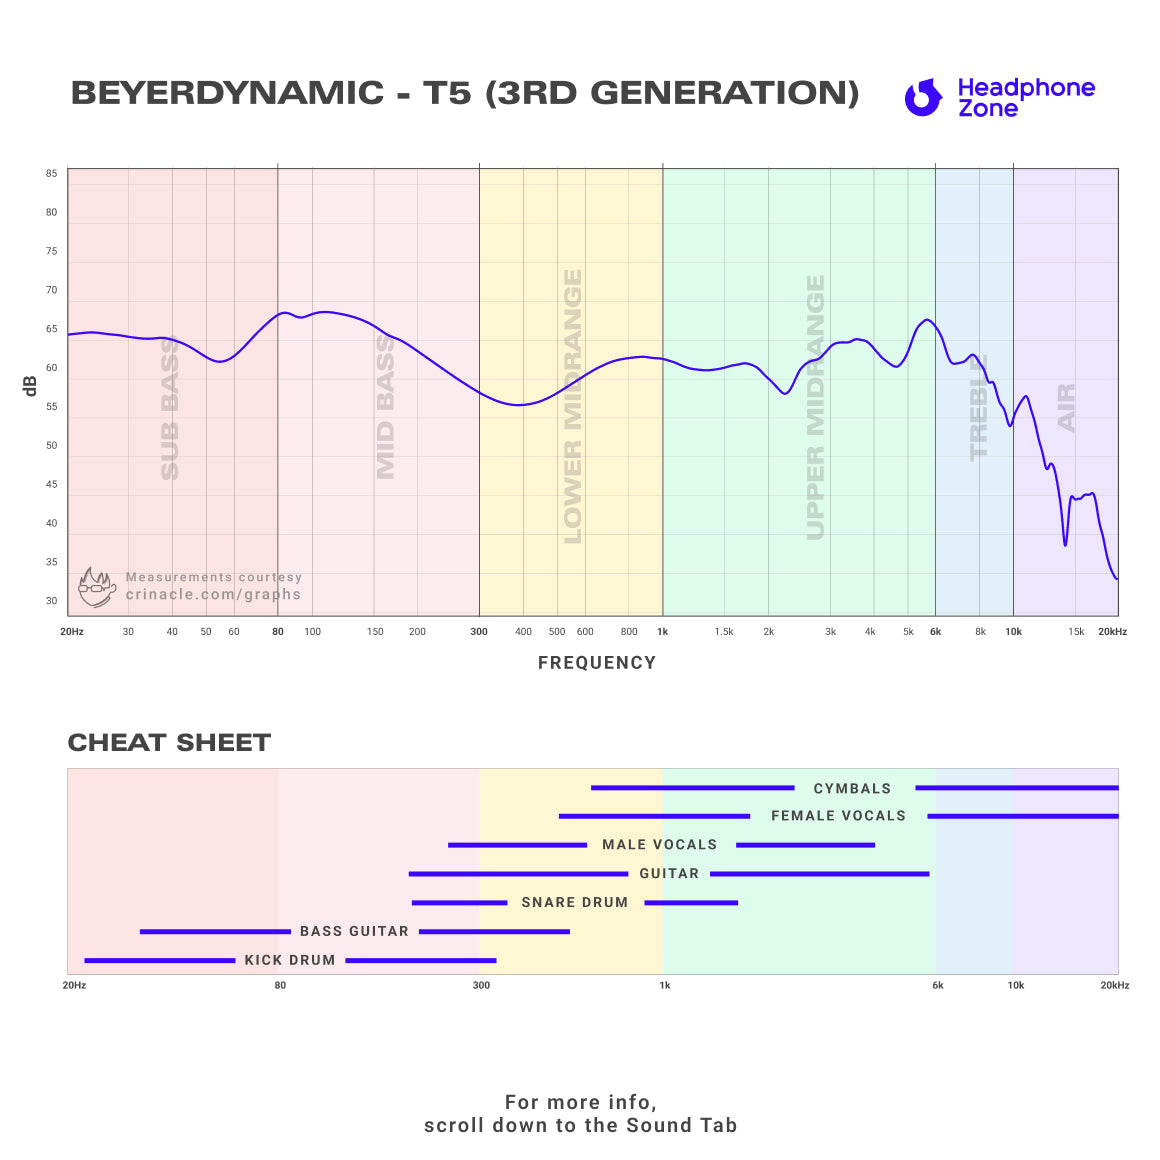 Beyerdynamic - T5 (3rd Generation)